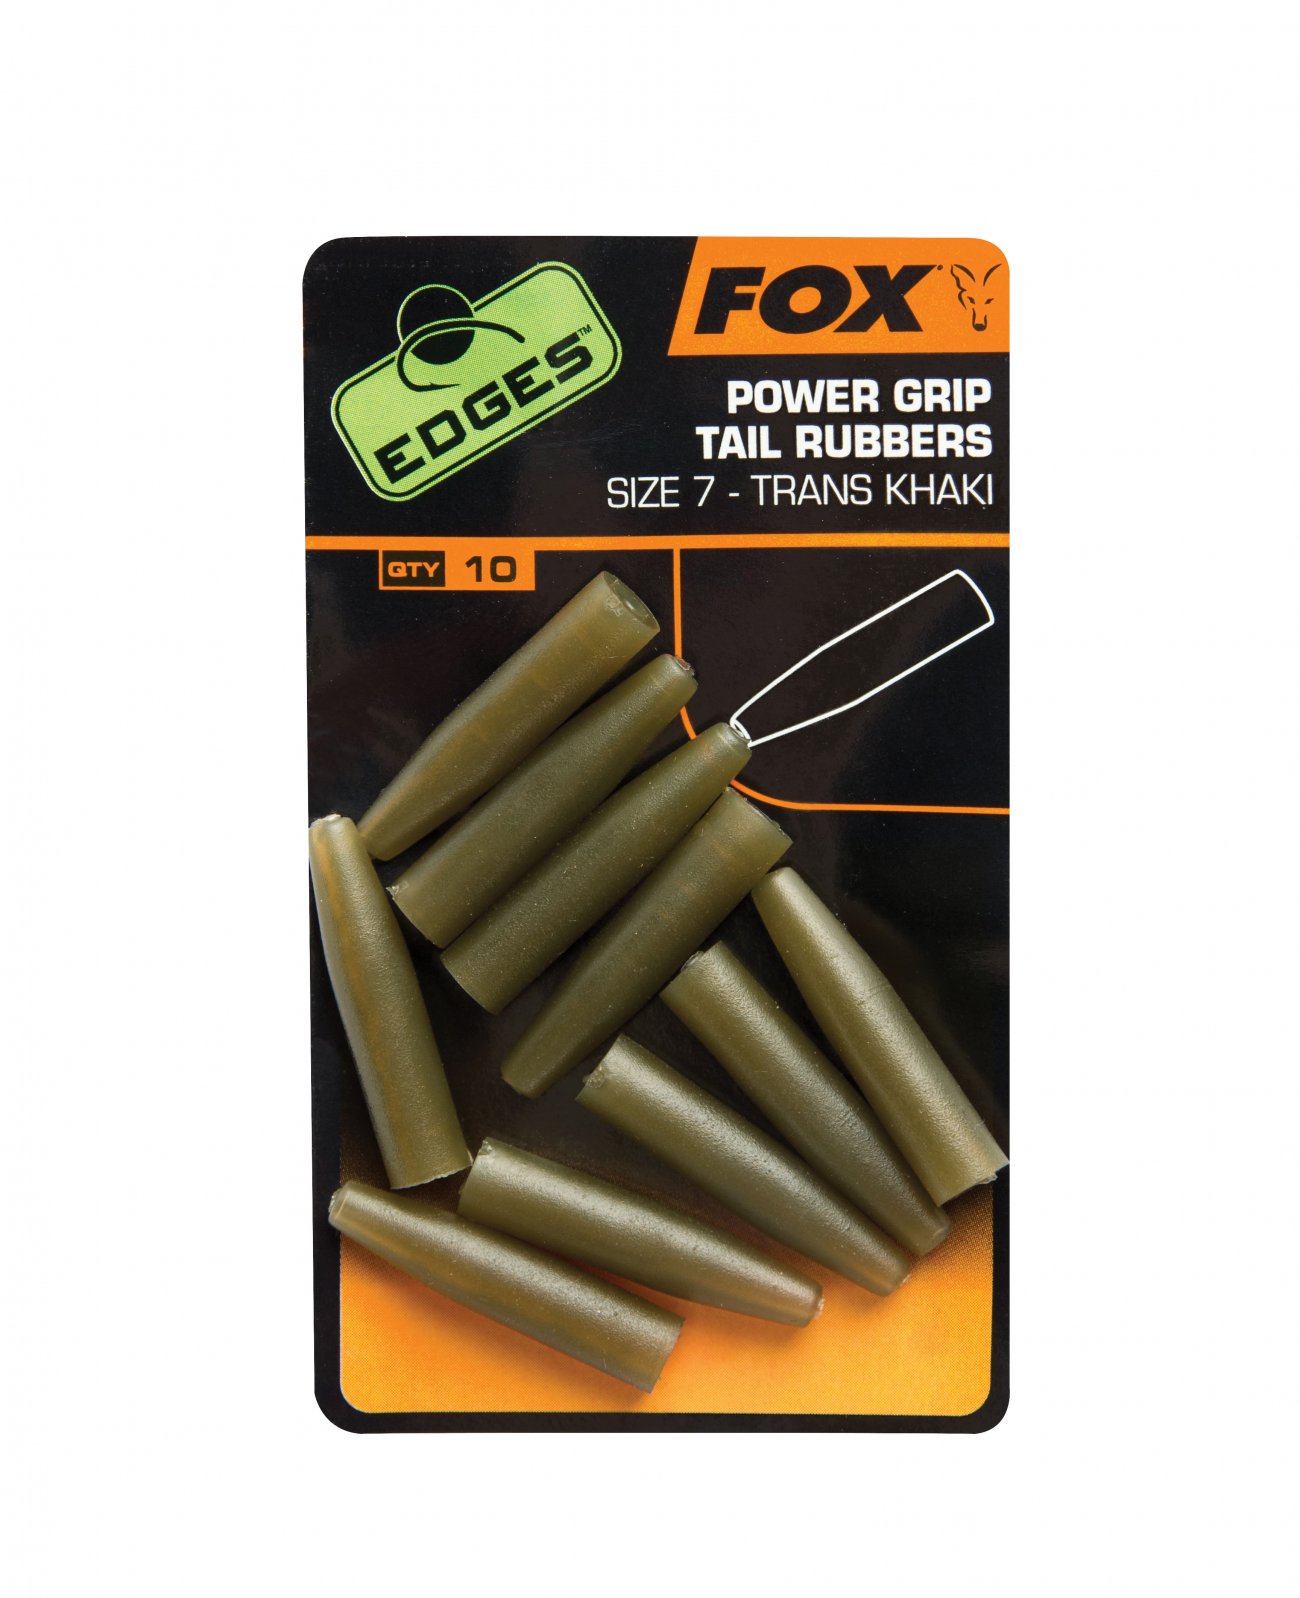 Fox power